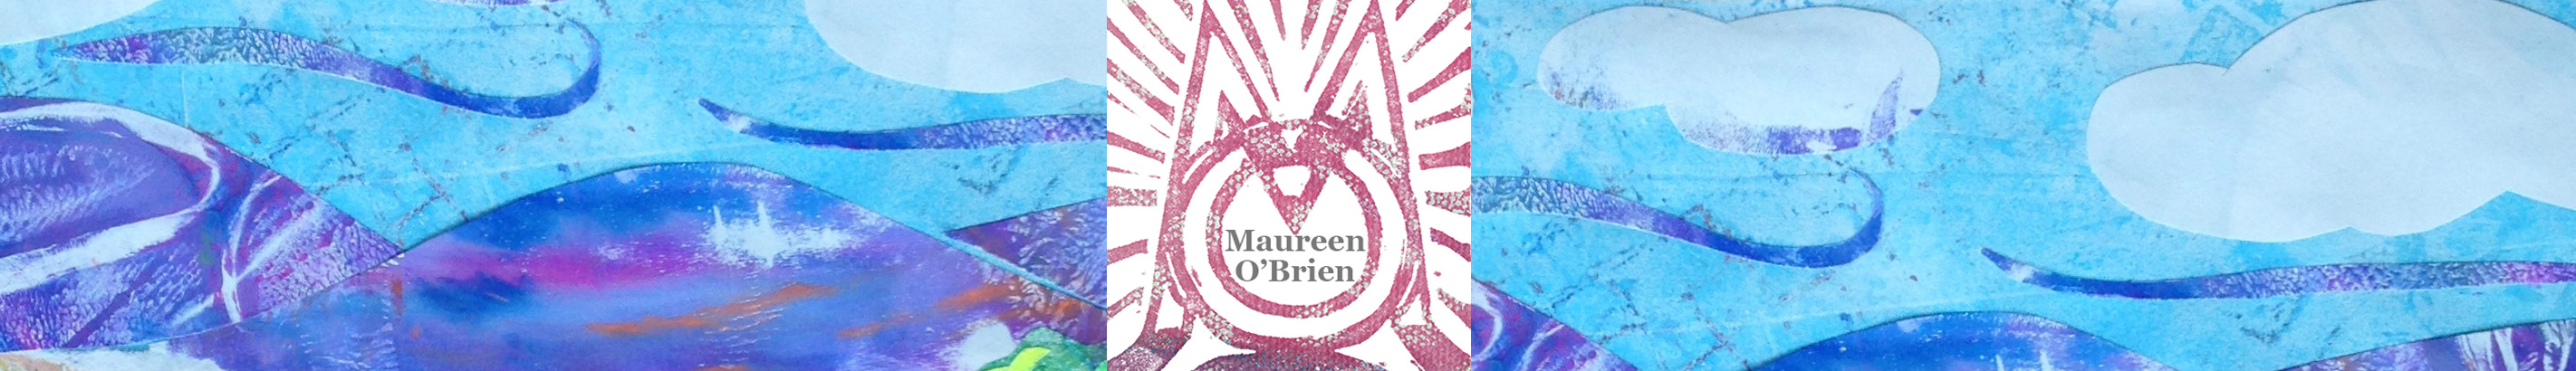 Maureen O'Brien's profile banner